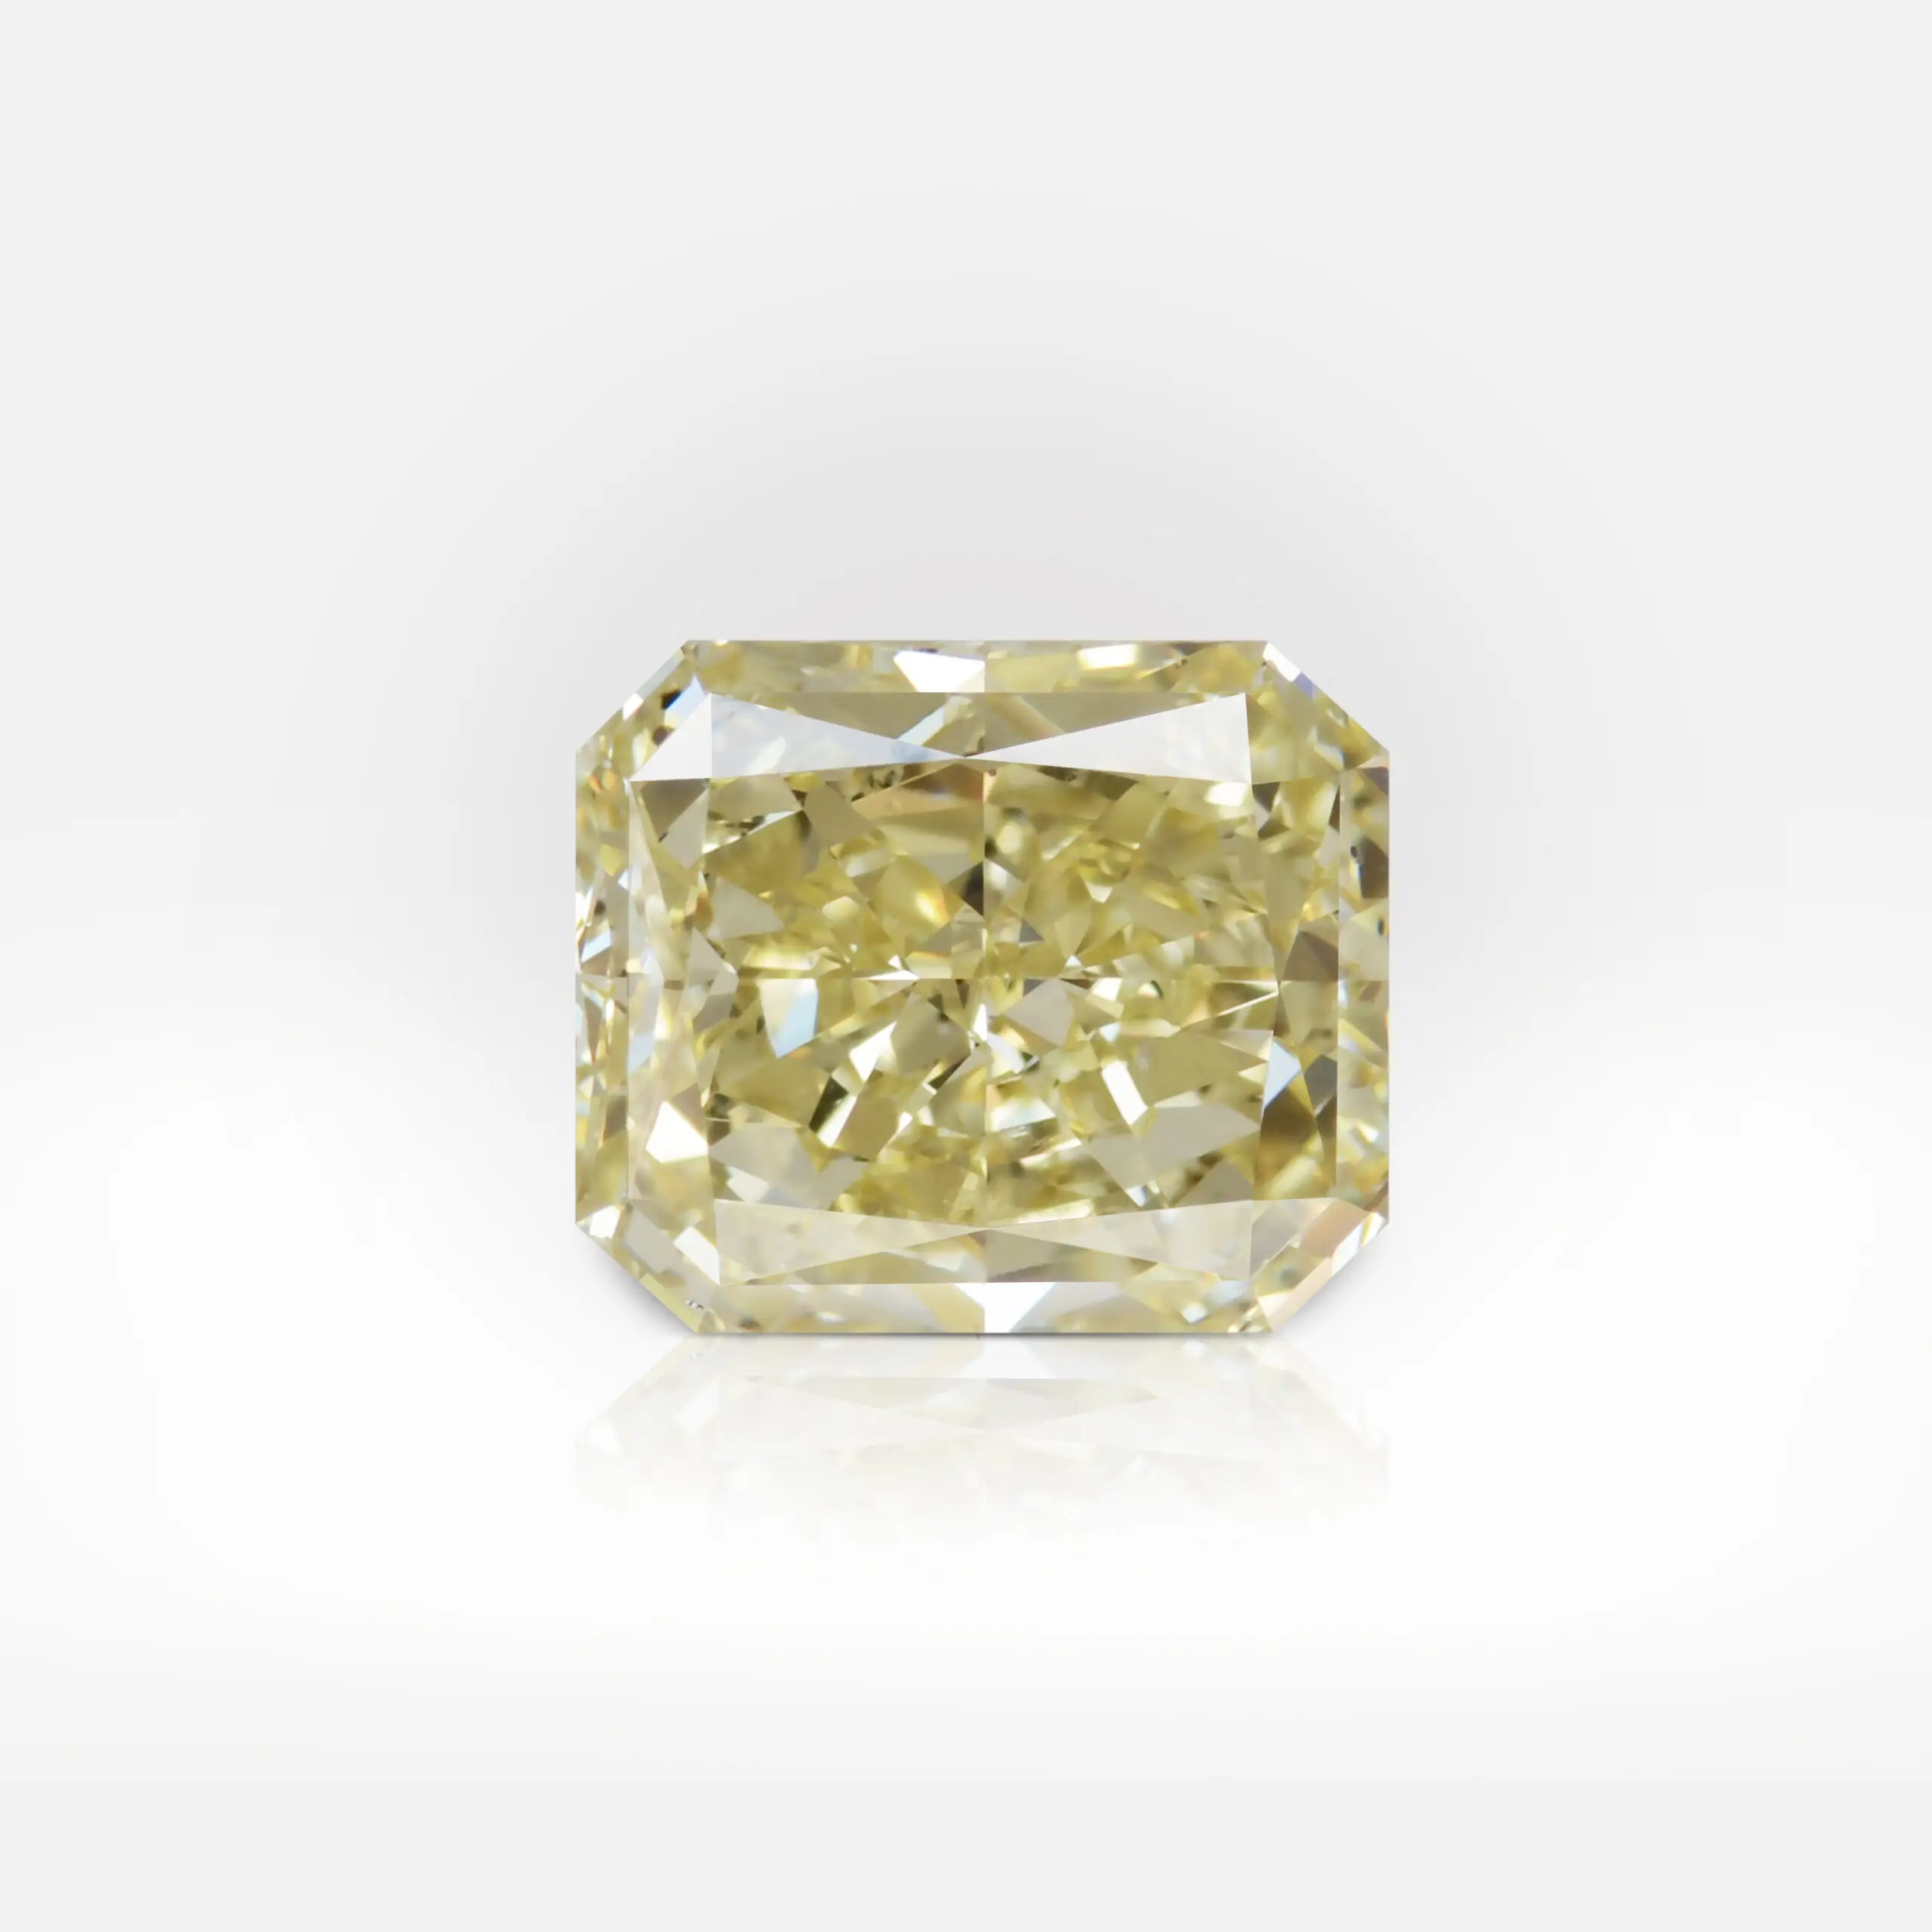 1.71 carat Fancy Yellow I1 Radiant Shape Diamond GIA - picture 1